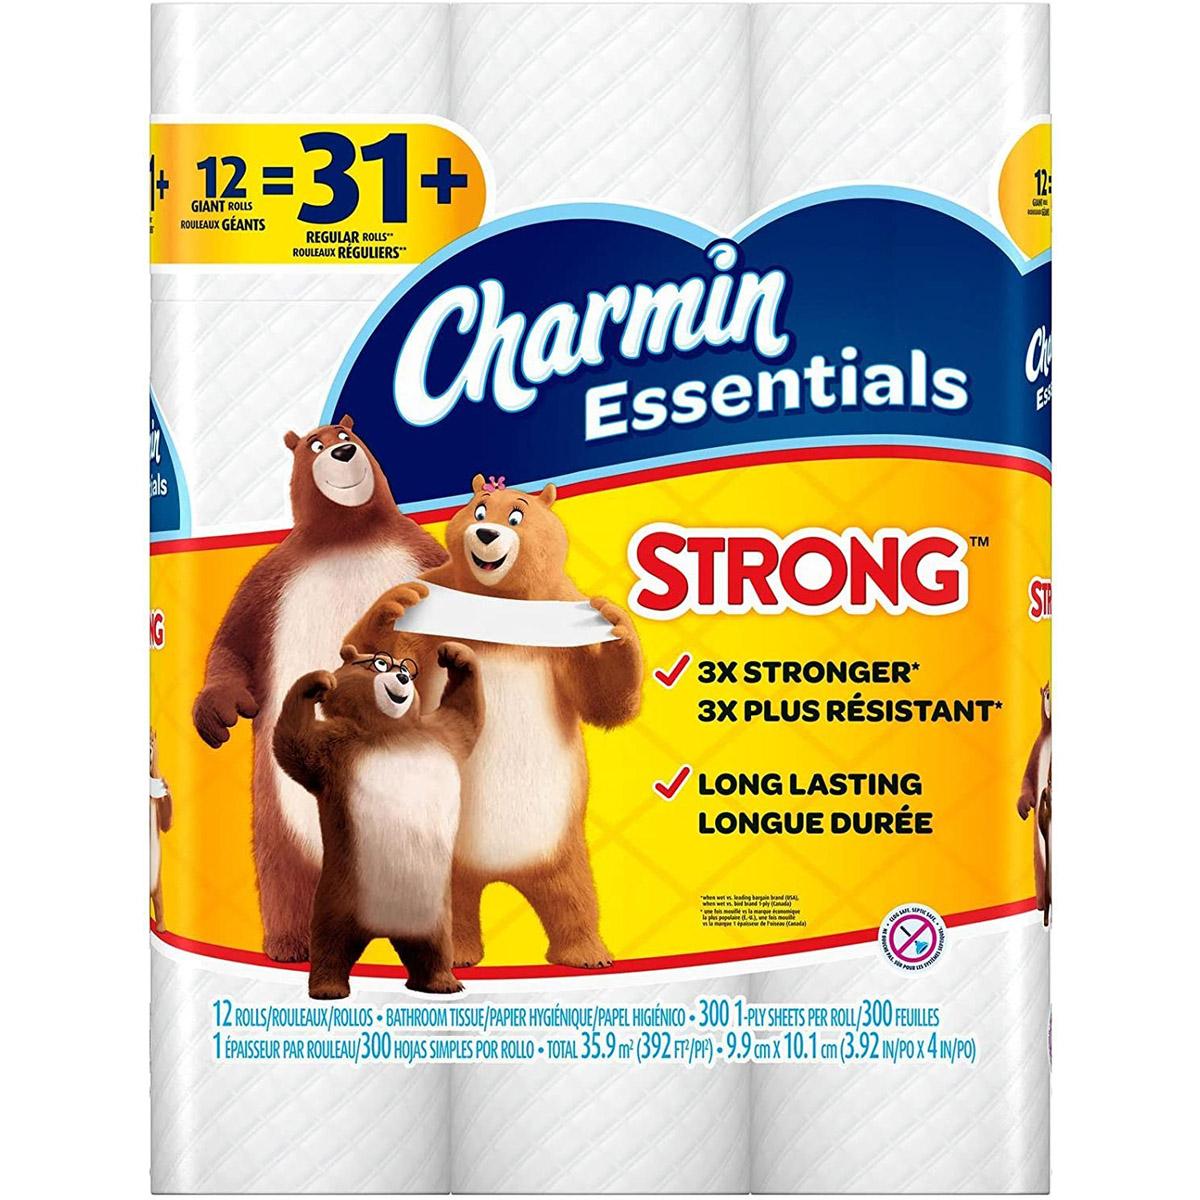 12 Charmin Essentials Giant Rolls Bath Tissues Toilet Paper for $5.24